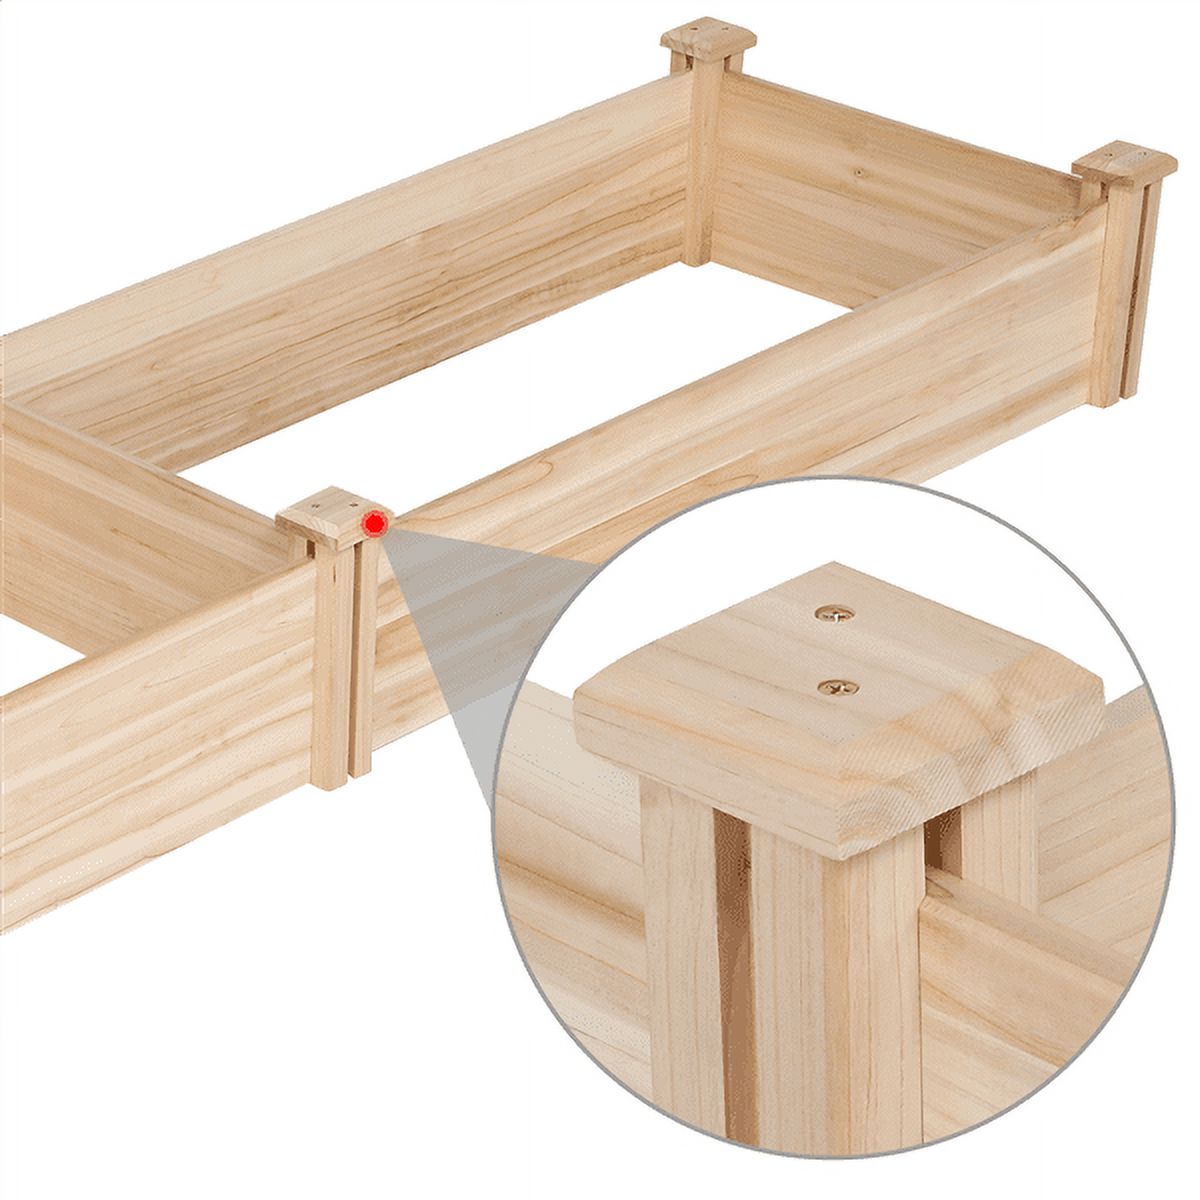 Alden Design Wooden Raised Garden Bed Planter Box for Patio Yard,Natural Wood - image 5 of 6